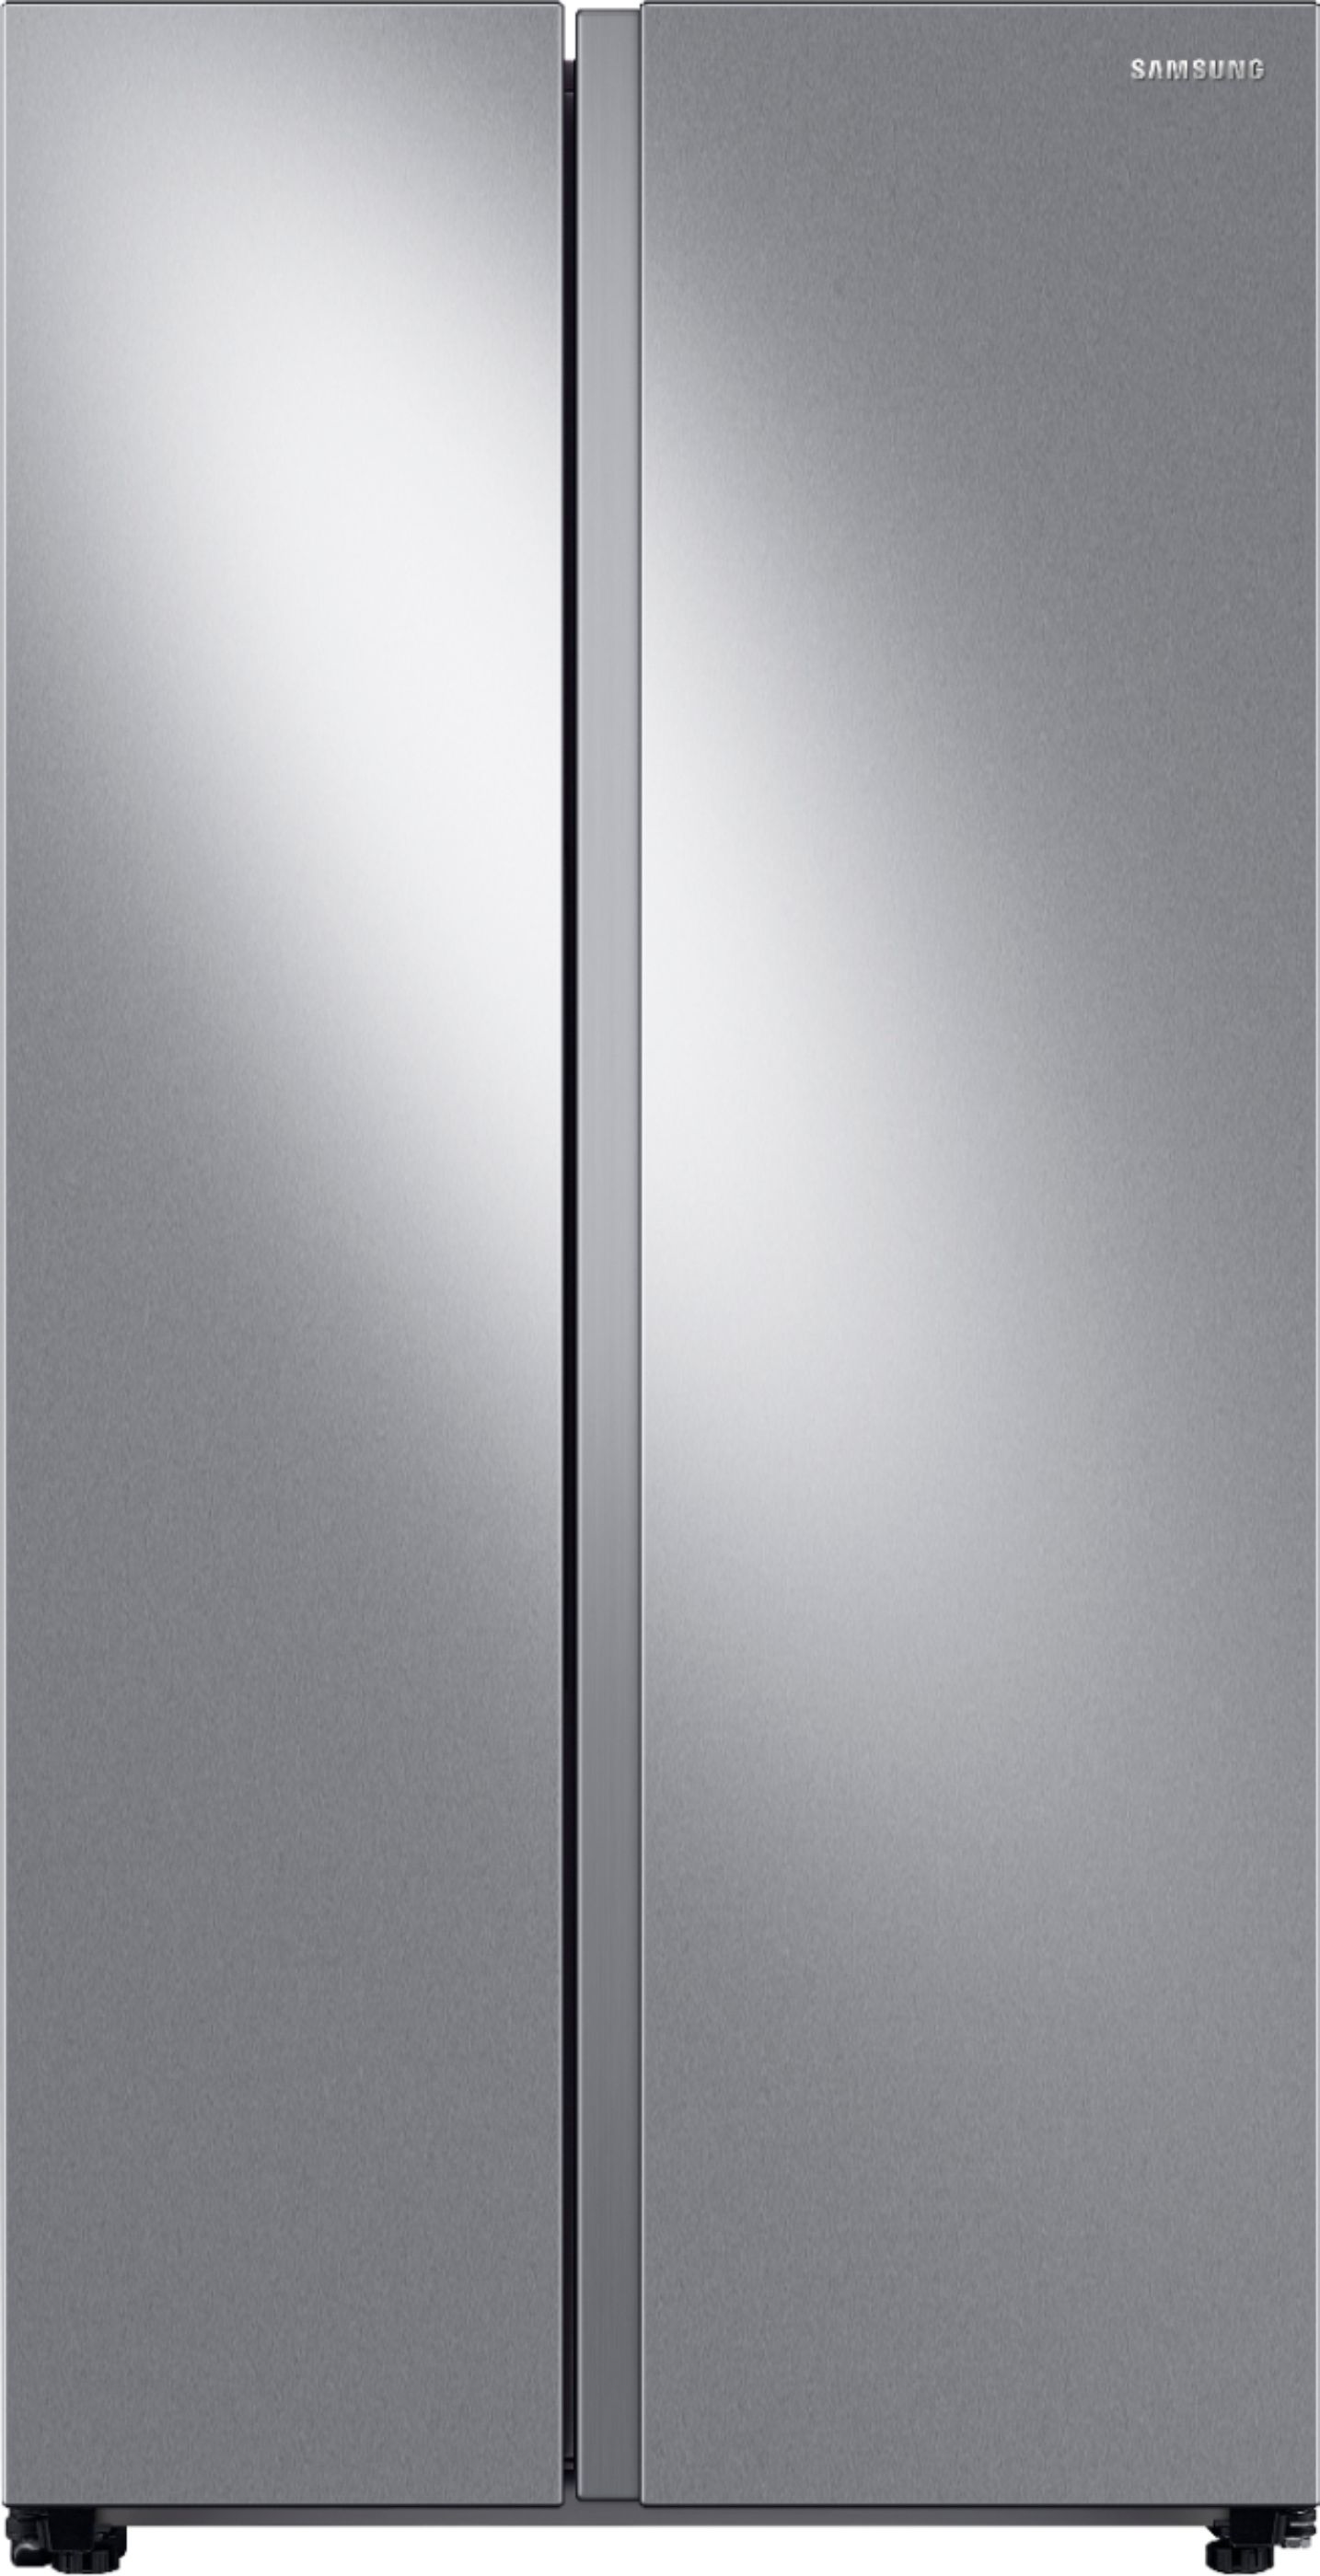 samsung stainless steel fridge